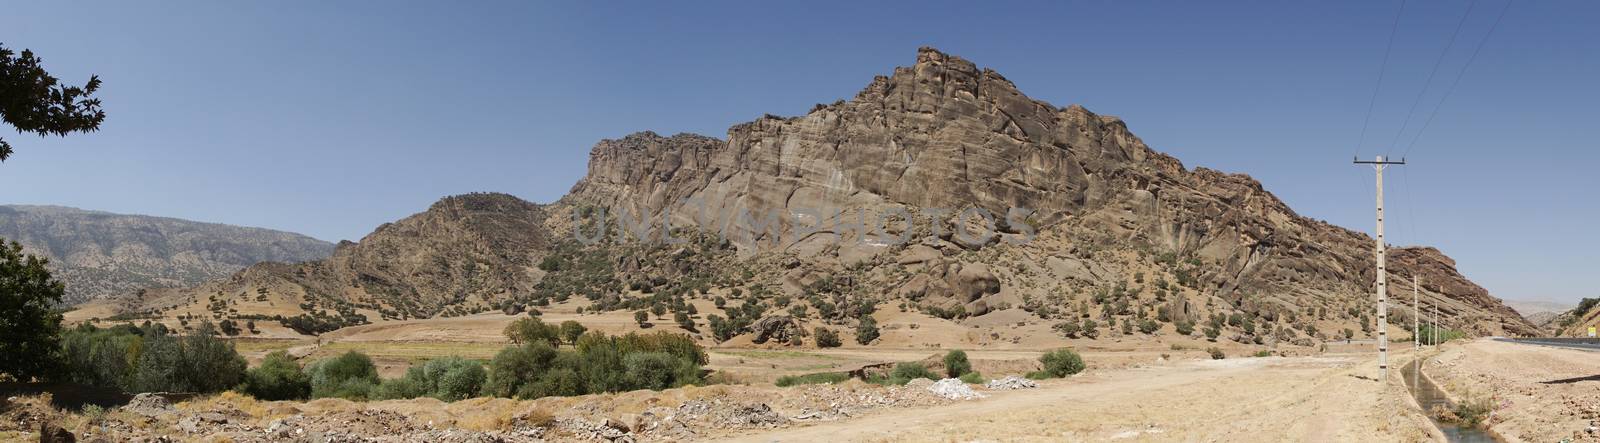 Landscape, Lorestan, Iran, Asia by alfotokunst